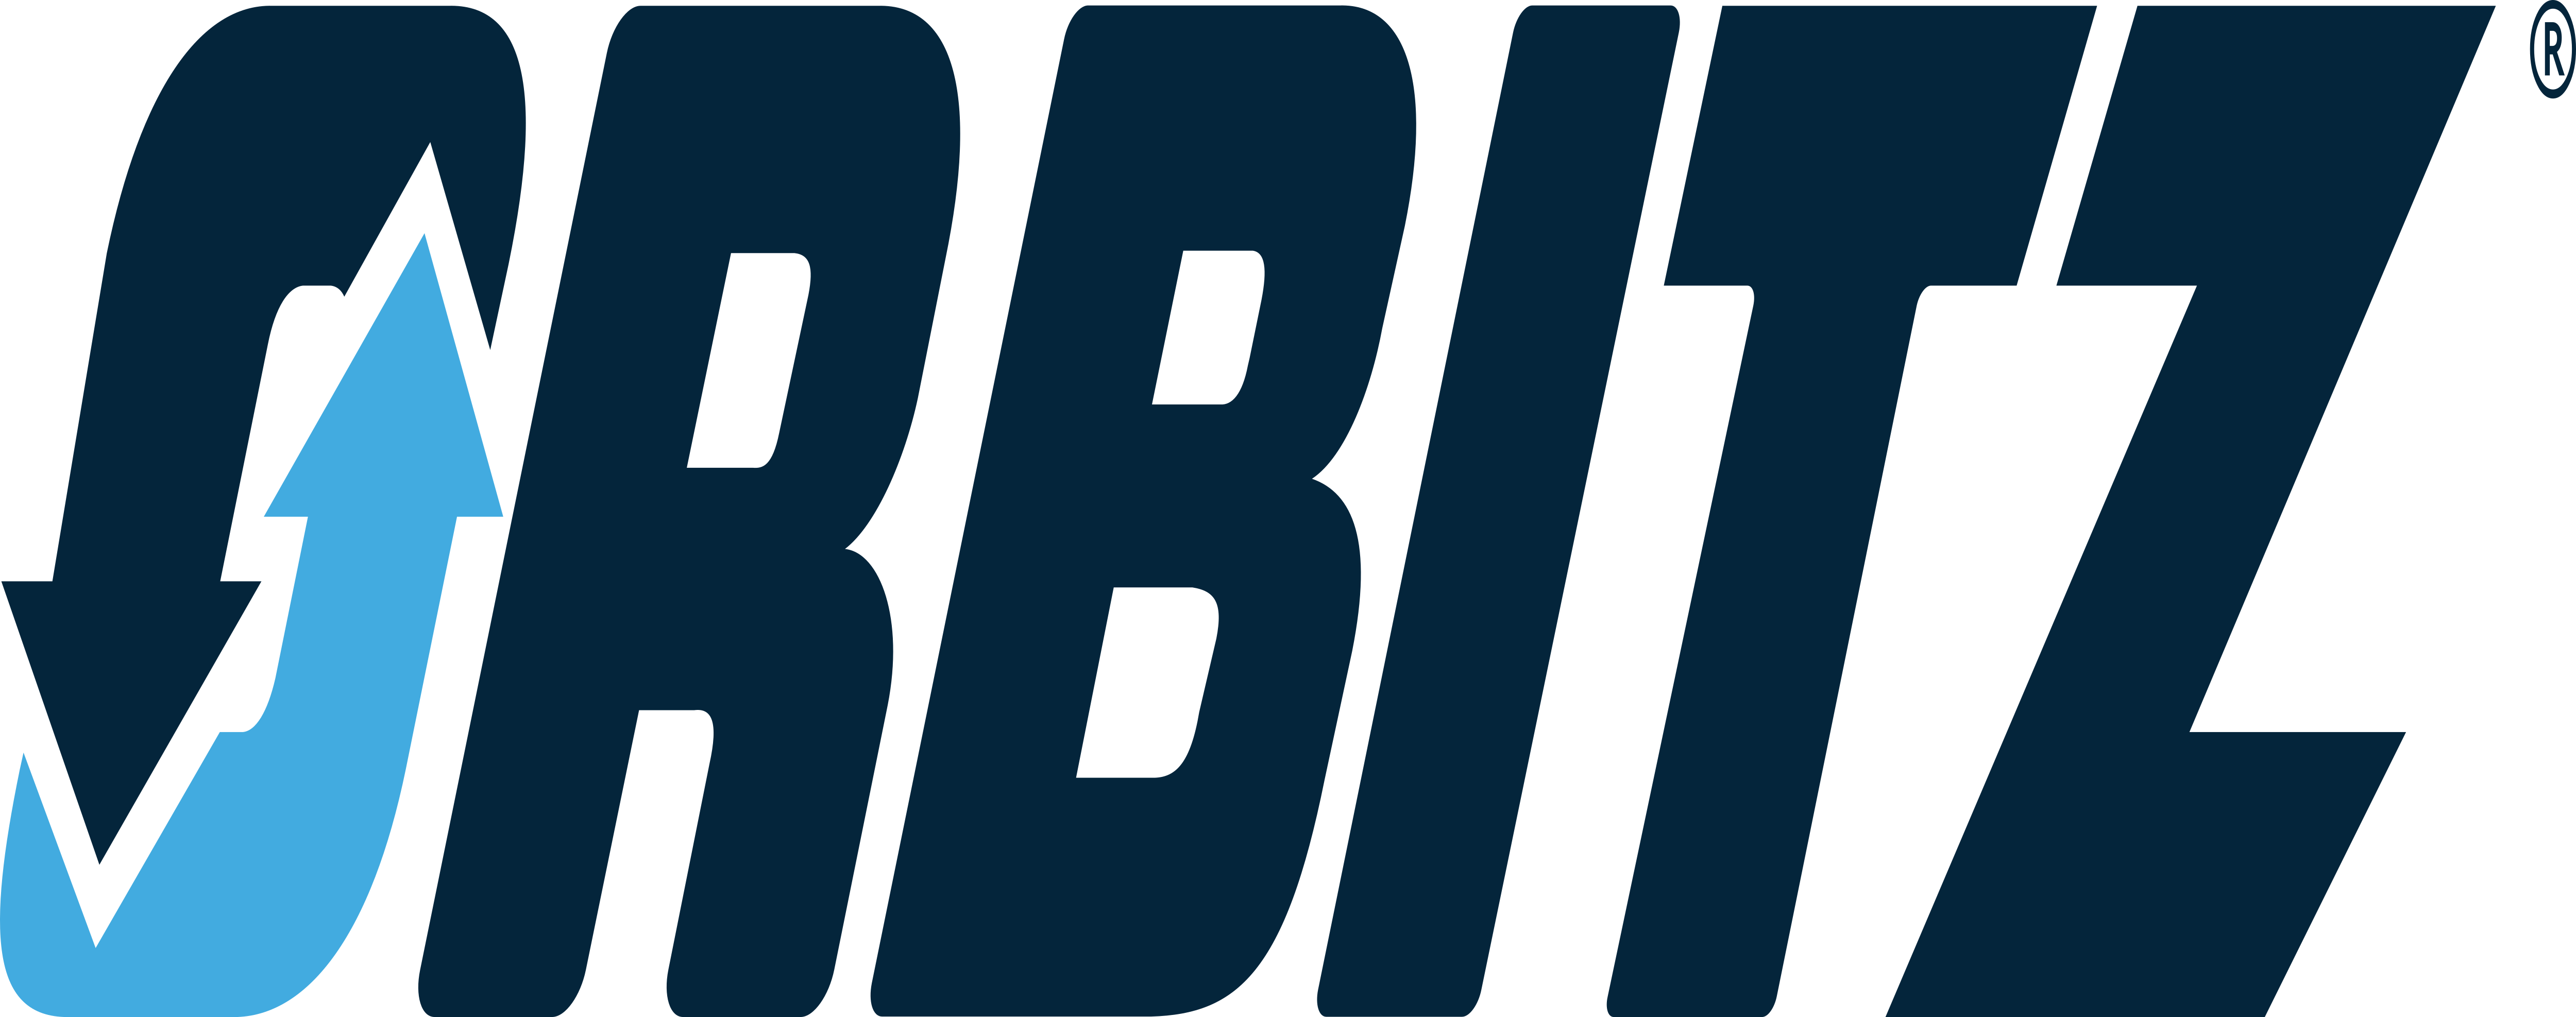 Orbitz.com Logo - Orbitz Travel